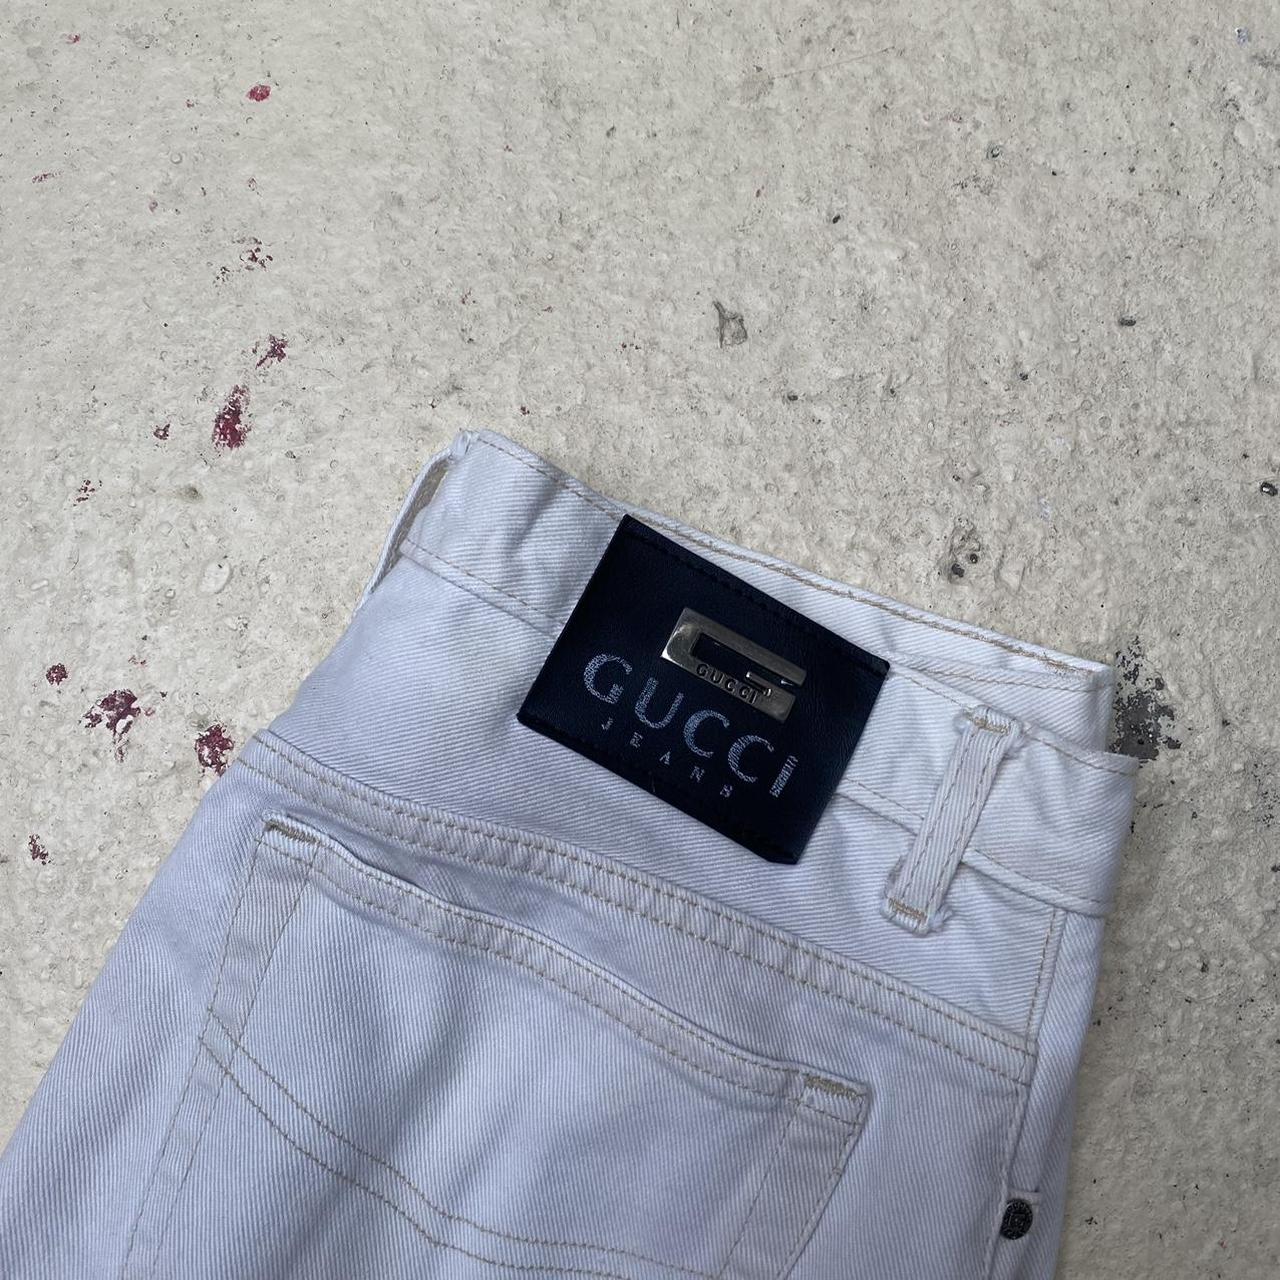 Gucci Men's White Jeans | Depop